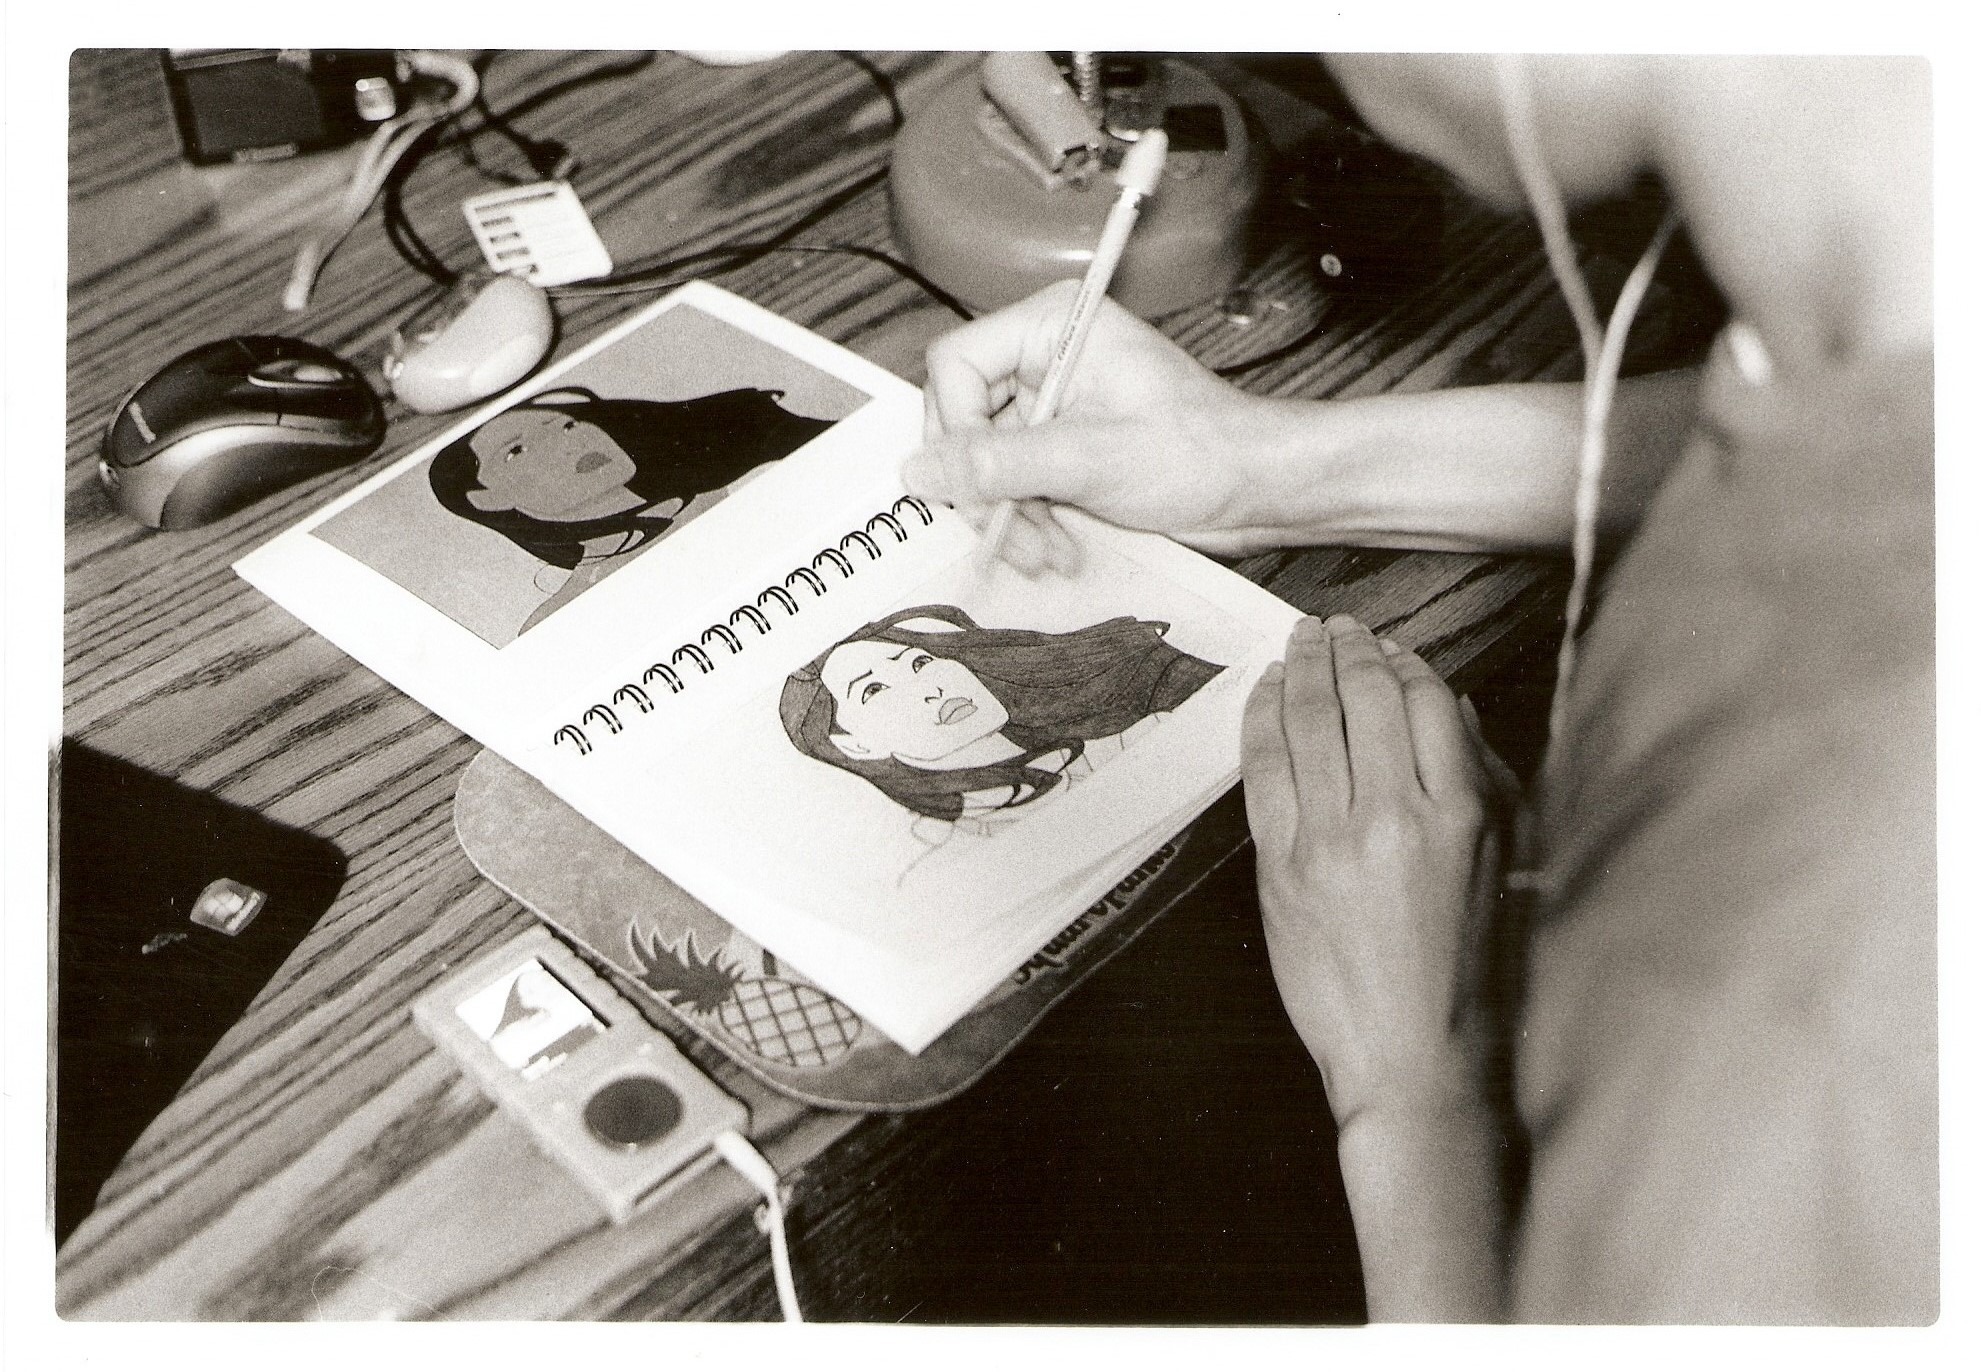 Jaire drawing a screenshot of Disney's Pocahontas.